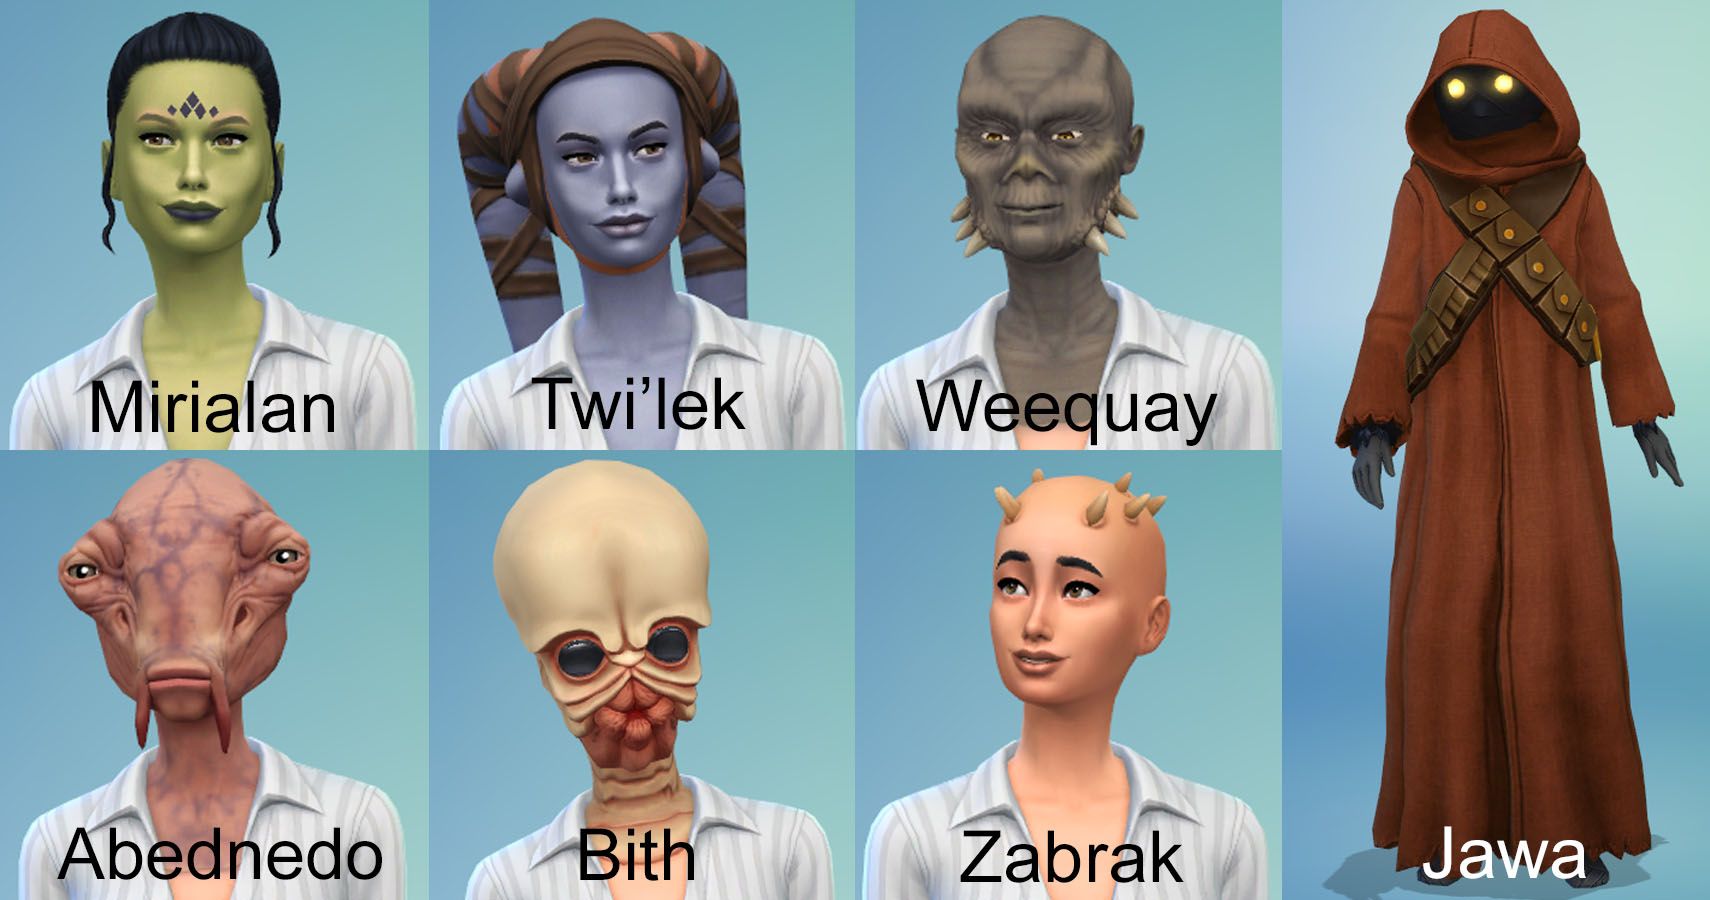 Sims 4 Aliens Star Wars